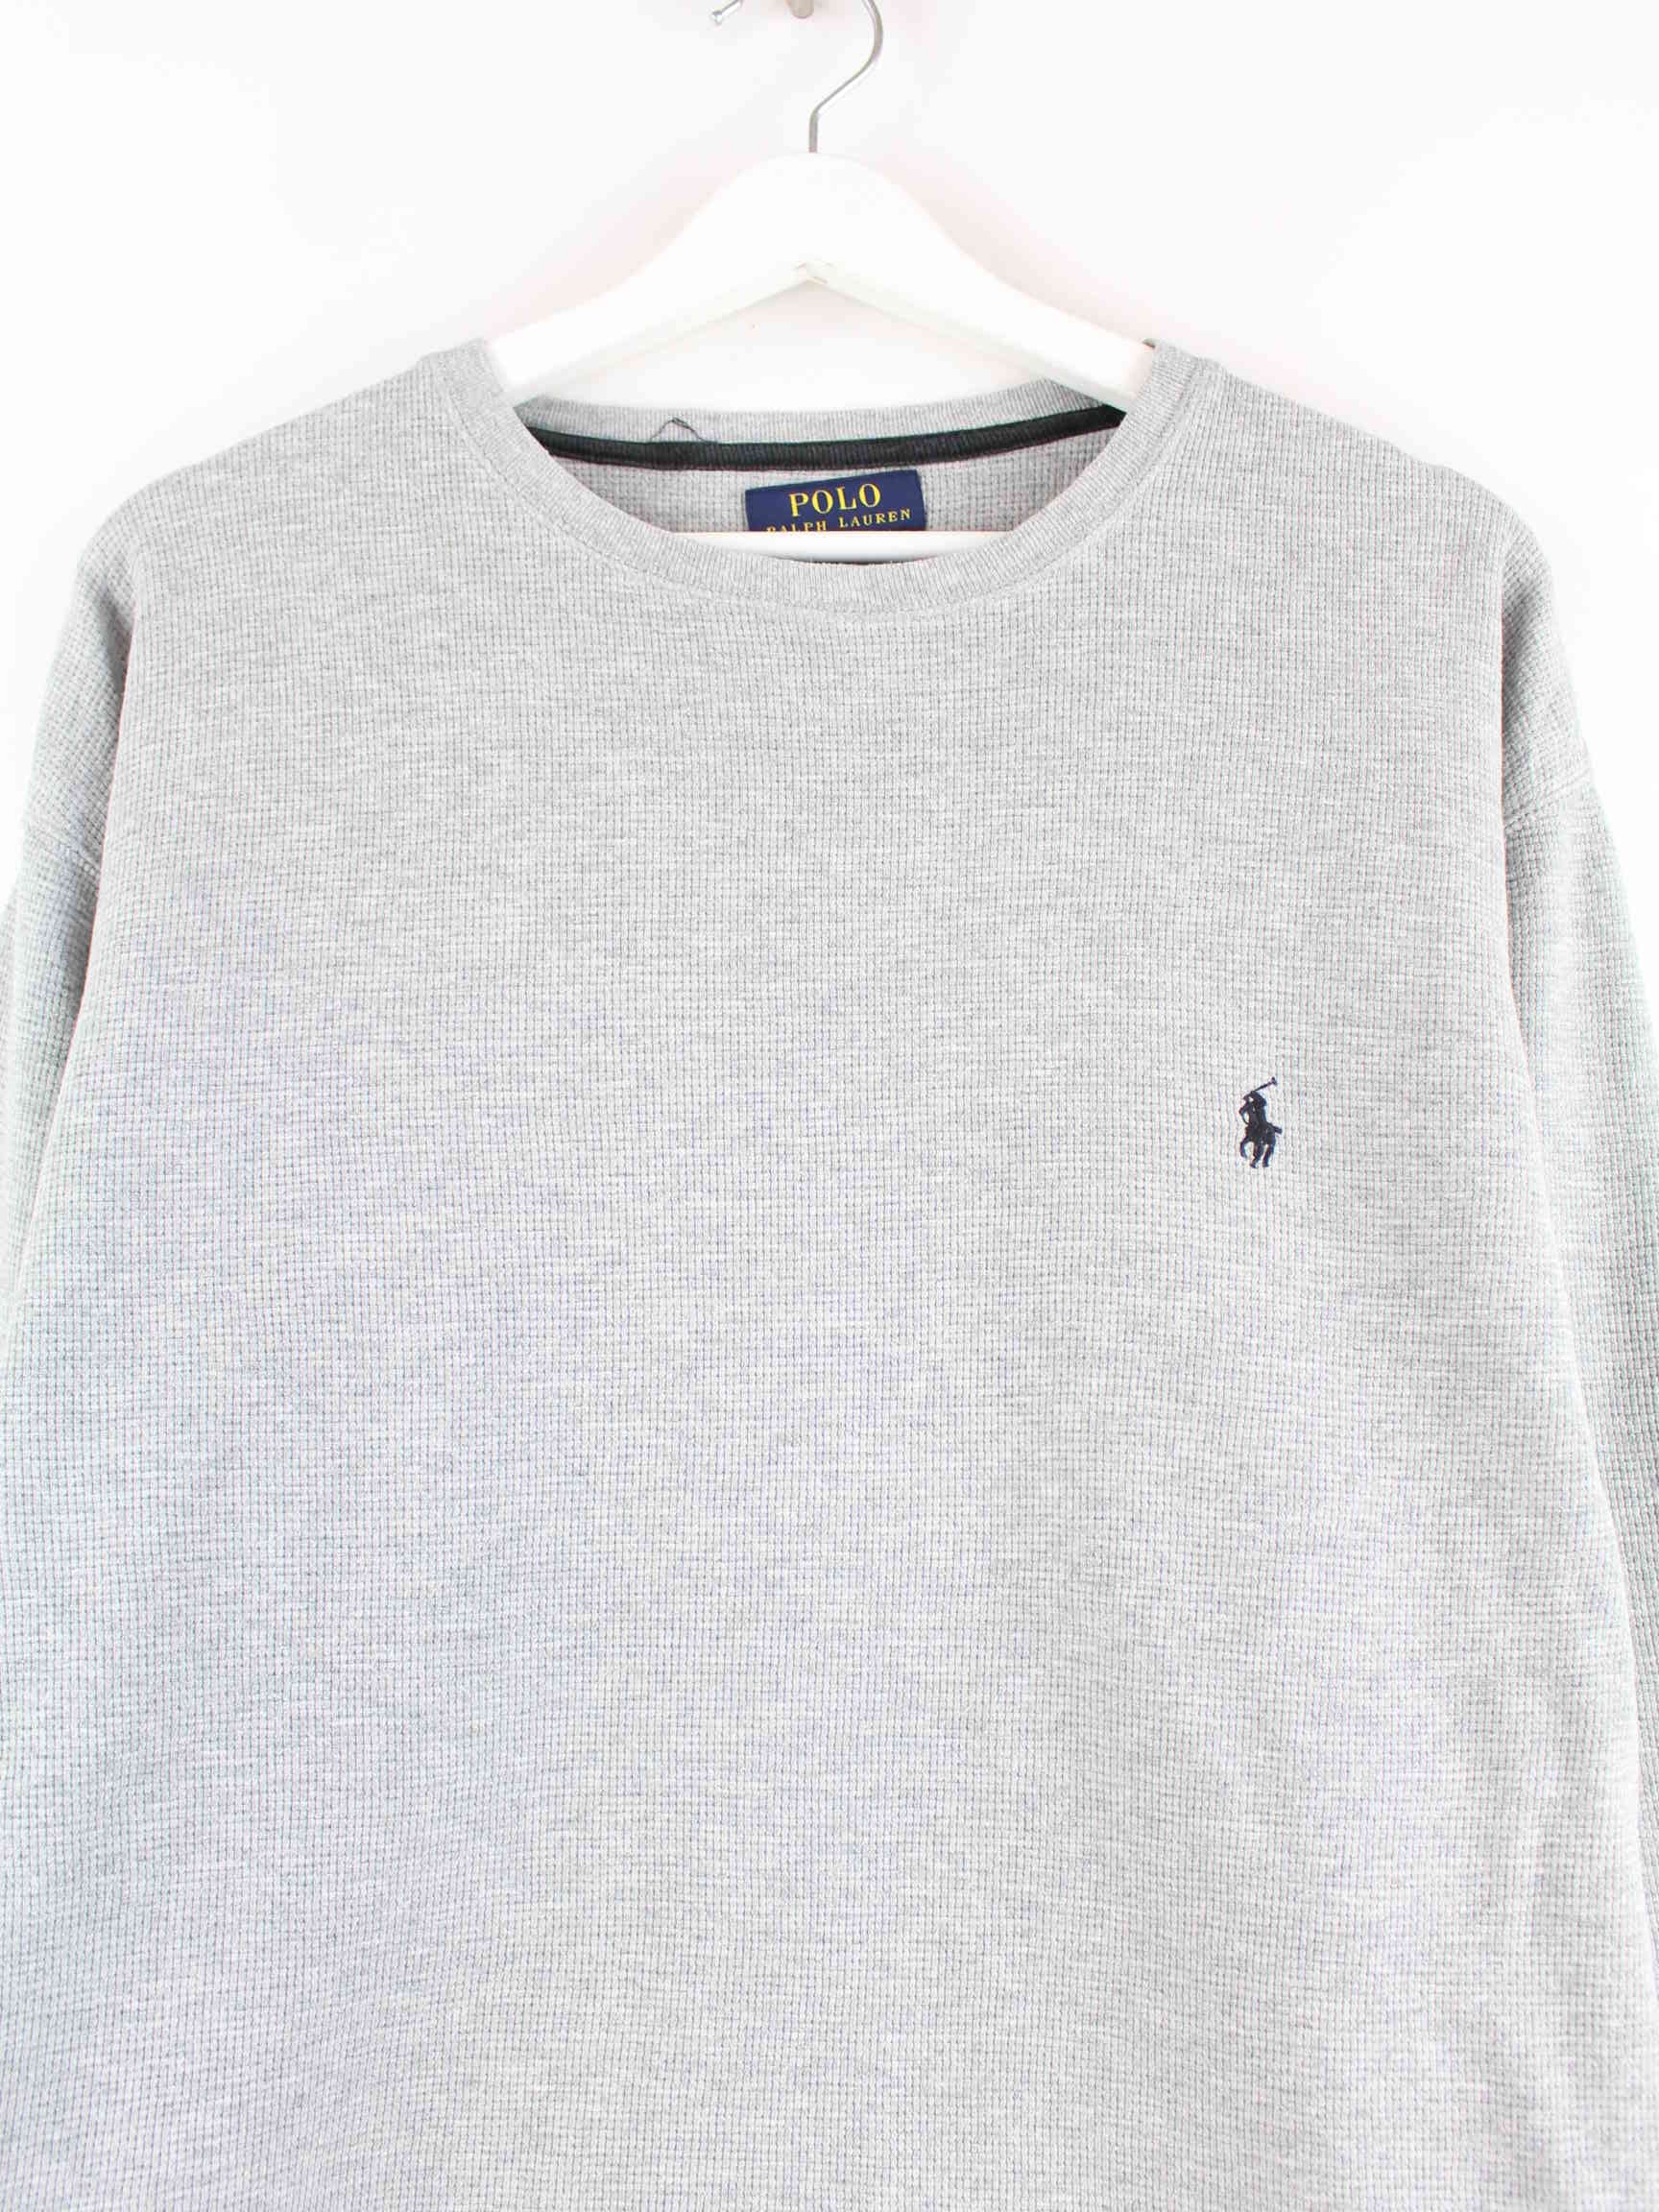 Ralph Lauren Sweatshirt Grau L (detail image 1)